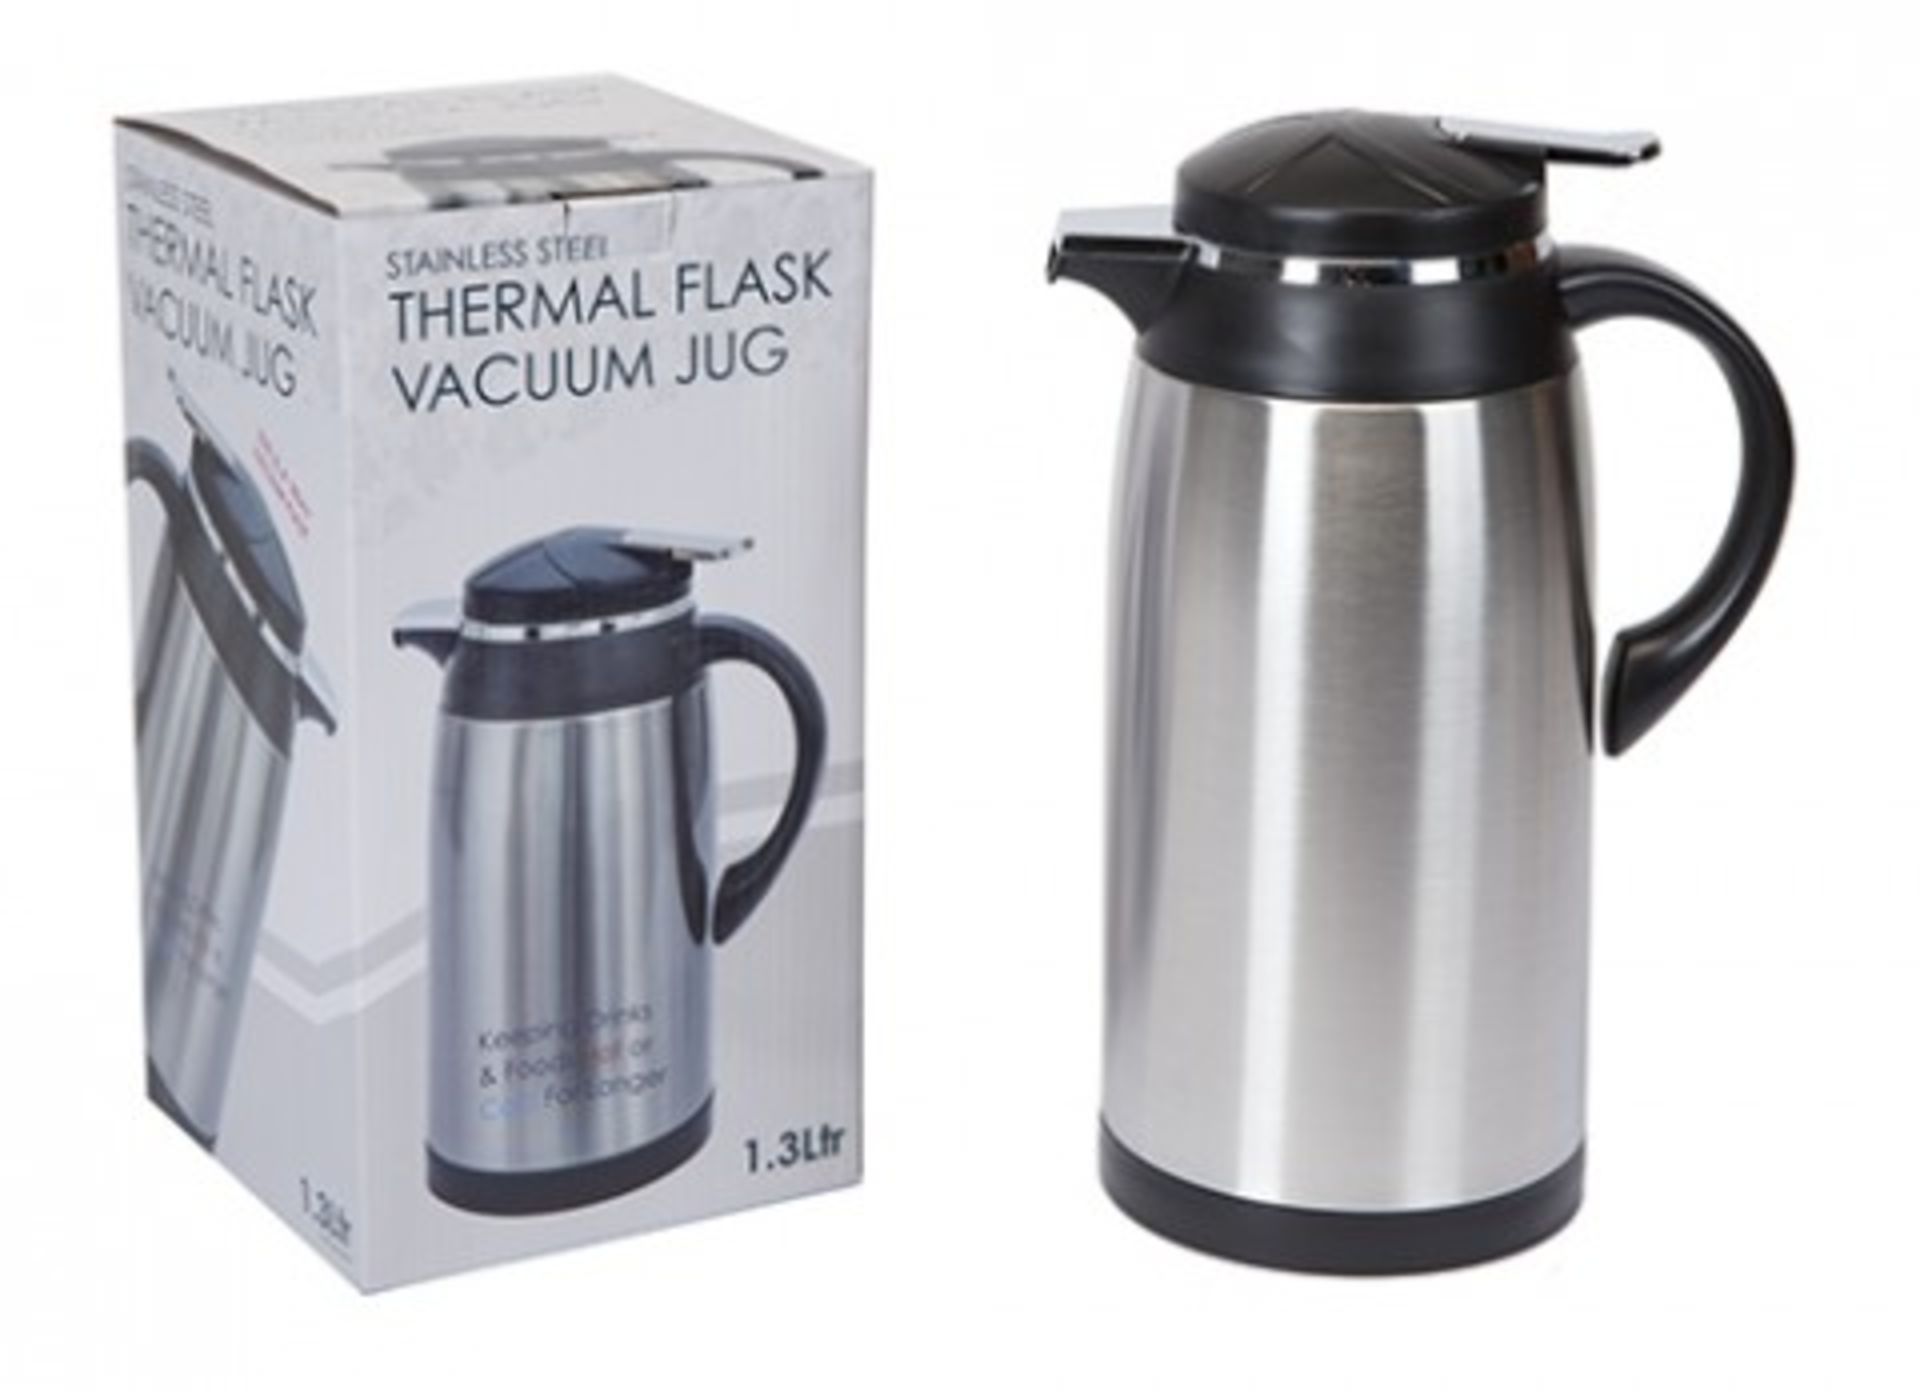 V Brand New Stainless Steel Thermal Flask Vacuum Jug